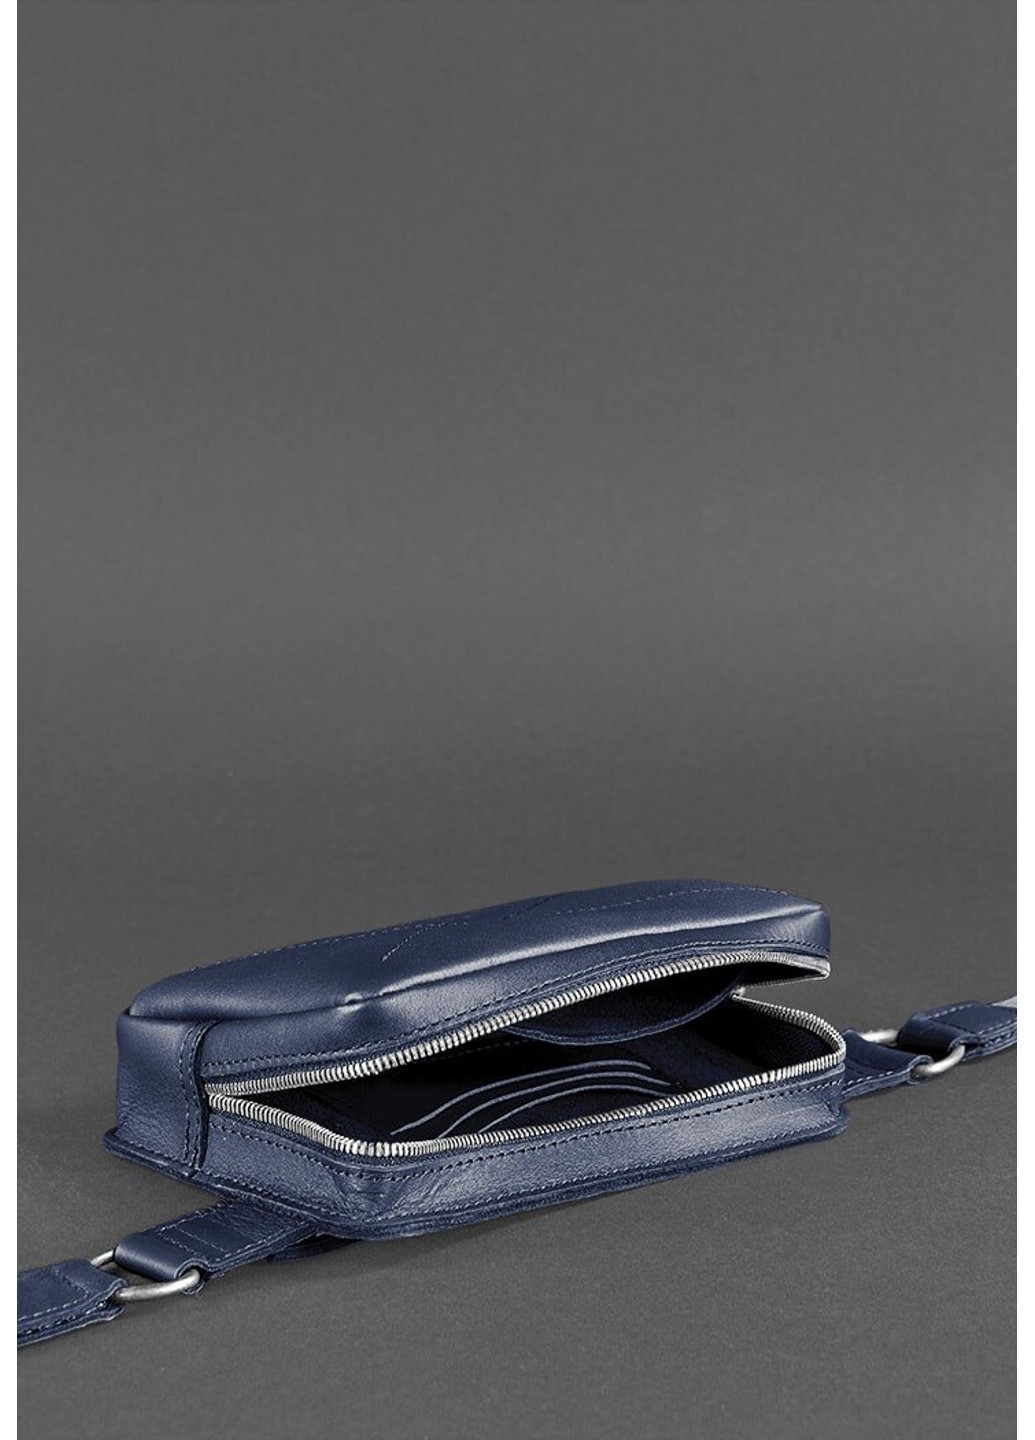 Шкіряна поясна сумка Dropbag Mini темно-синя bn-bag-6-navy-blue BlankNote (264478310)